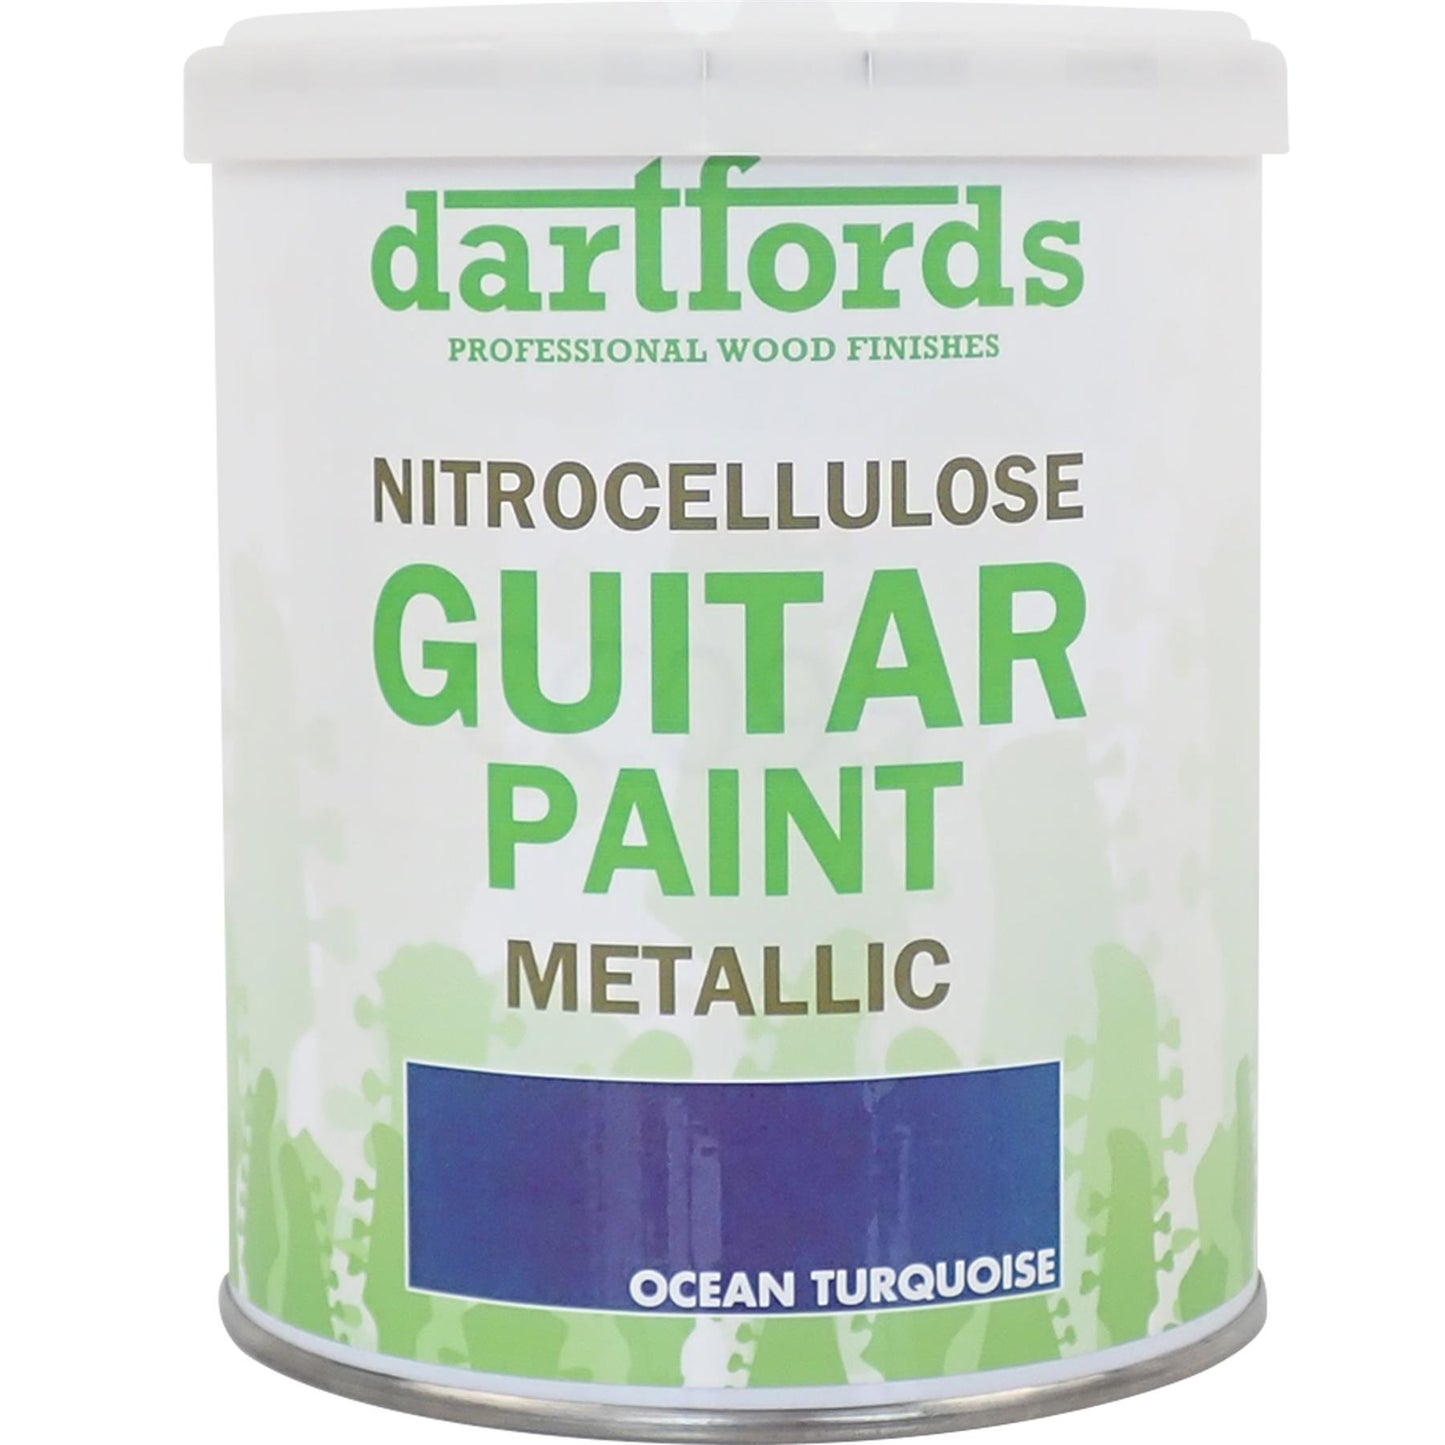 dartfords Ocean Turquoise Metallic Nitrocellulose Guitar Paint - 1 litre Tin